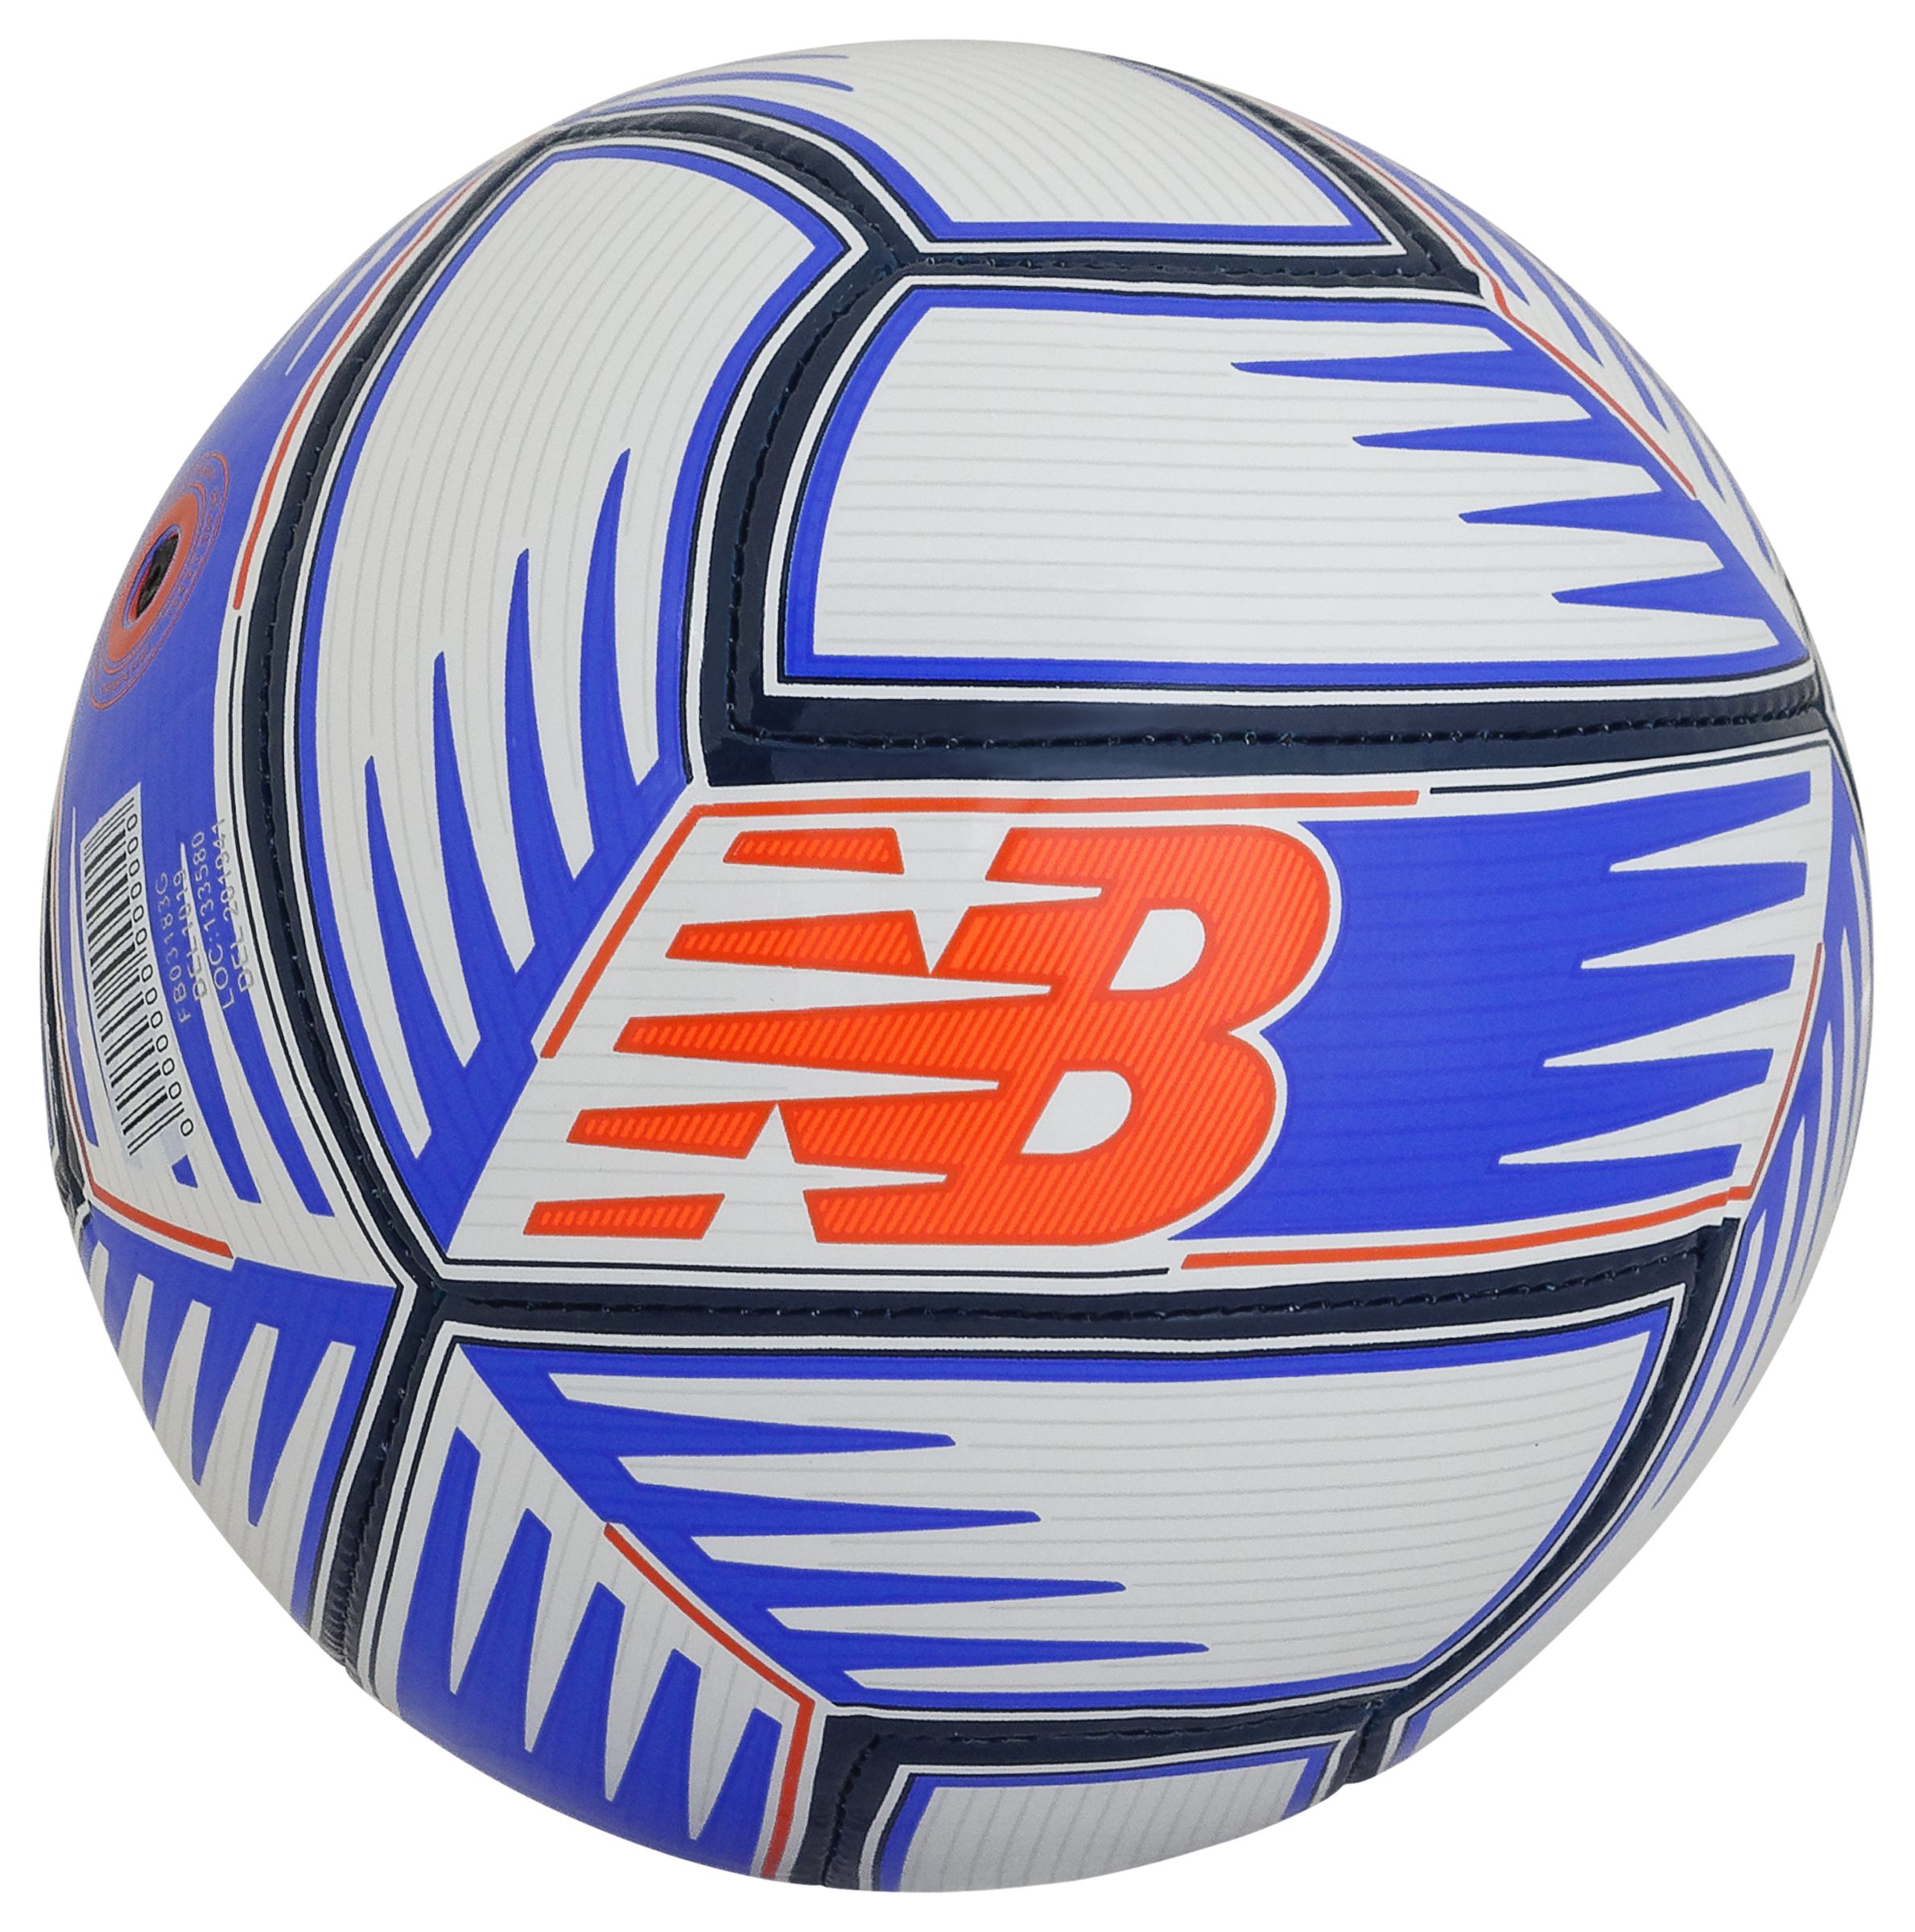 new balance soccer balls